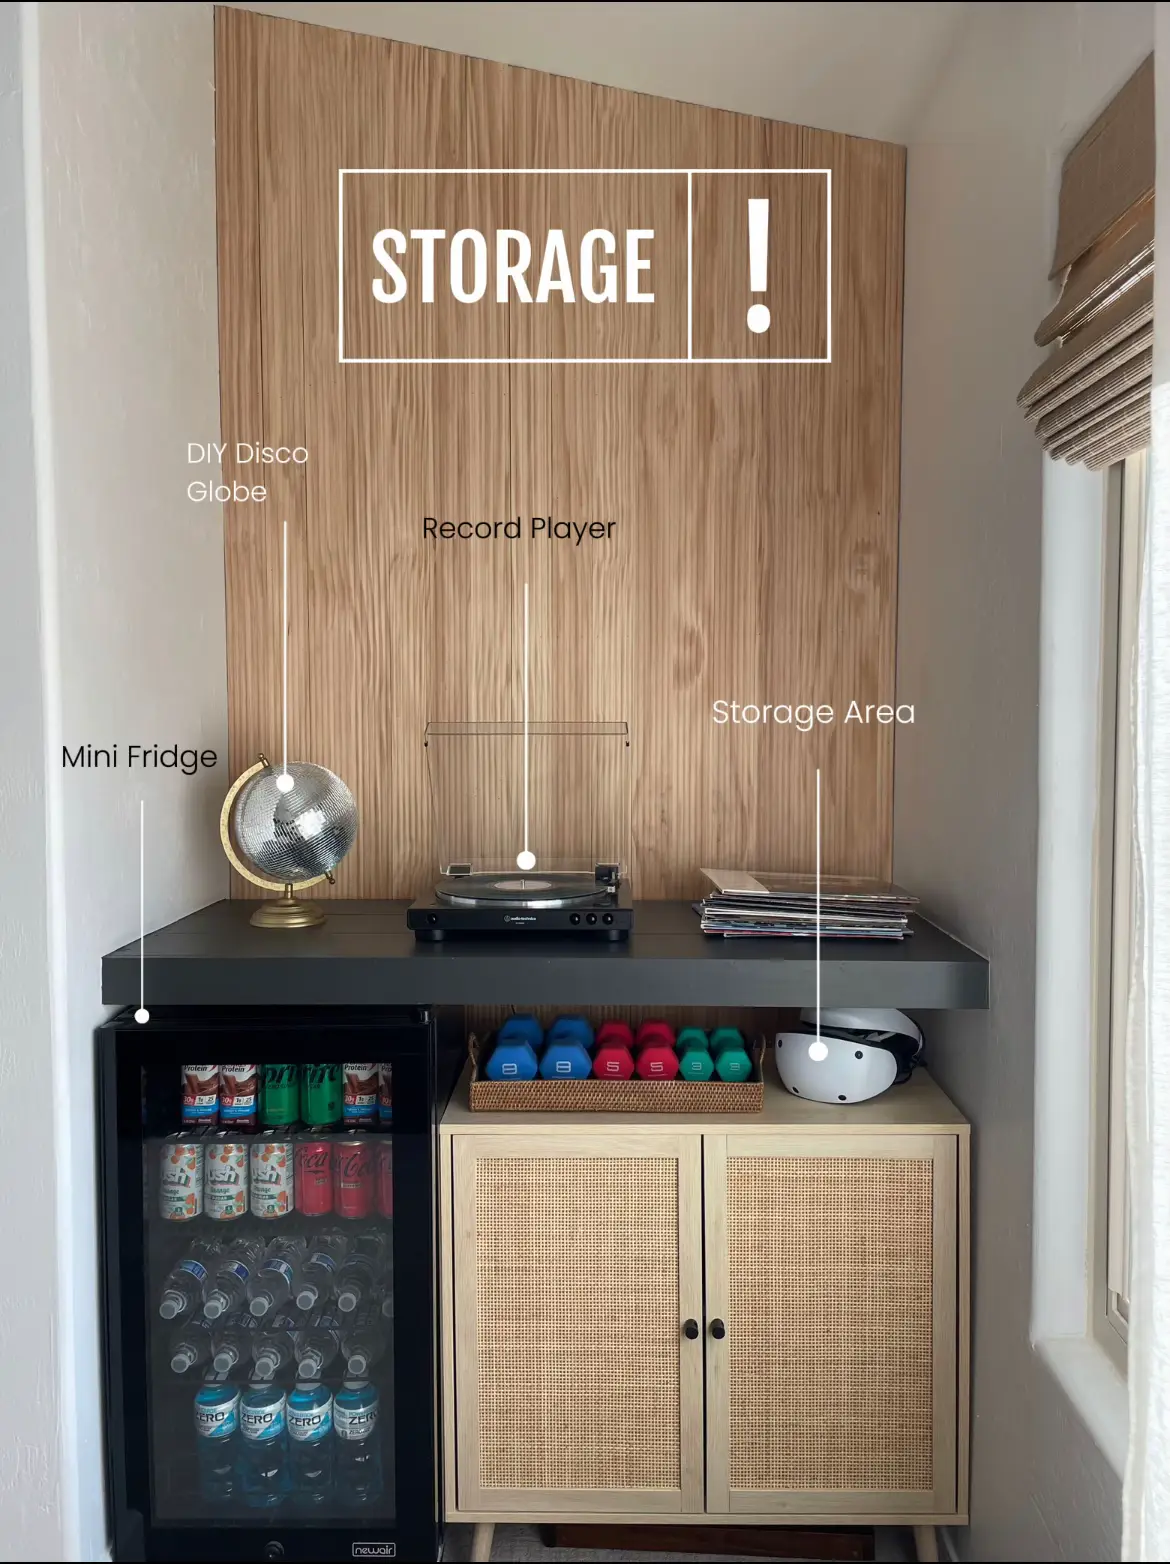 FRIGOBAR ONLINE Built-in mini fridge By Microdevice